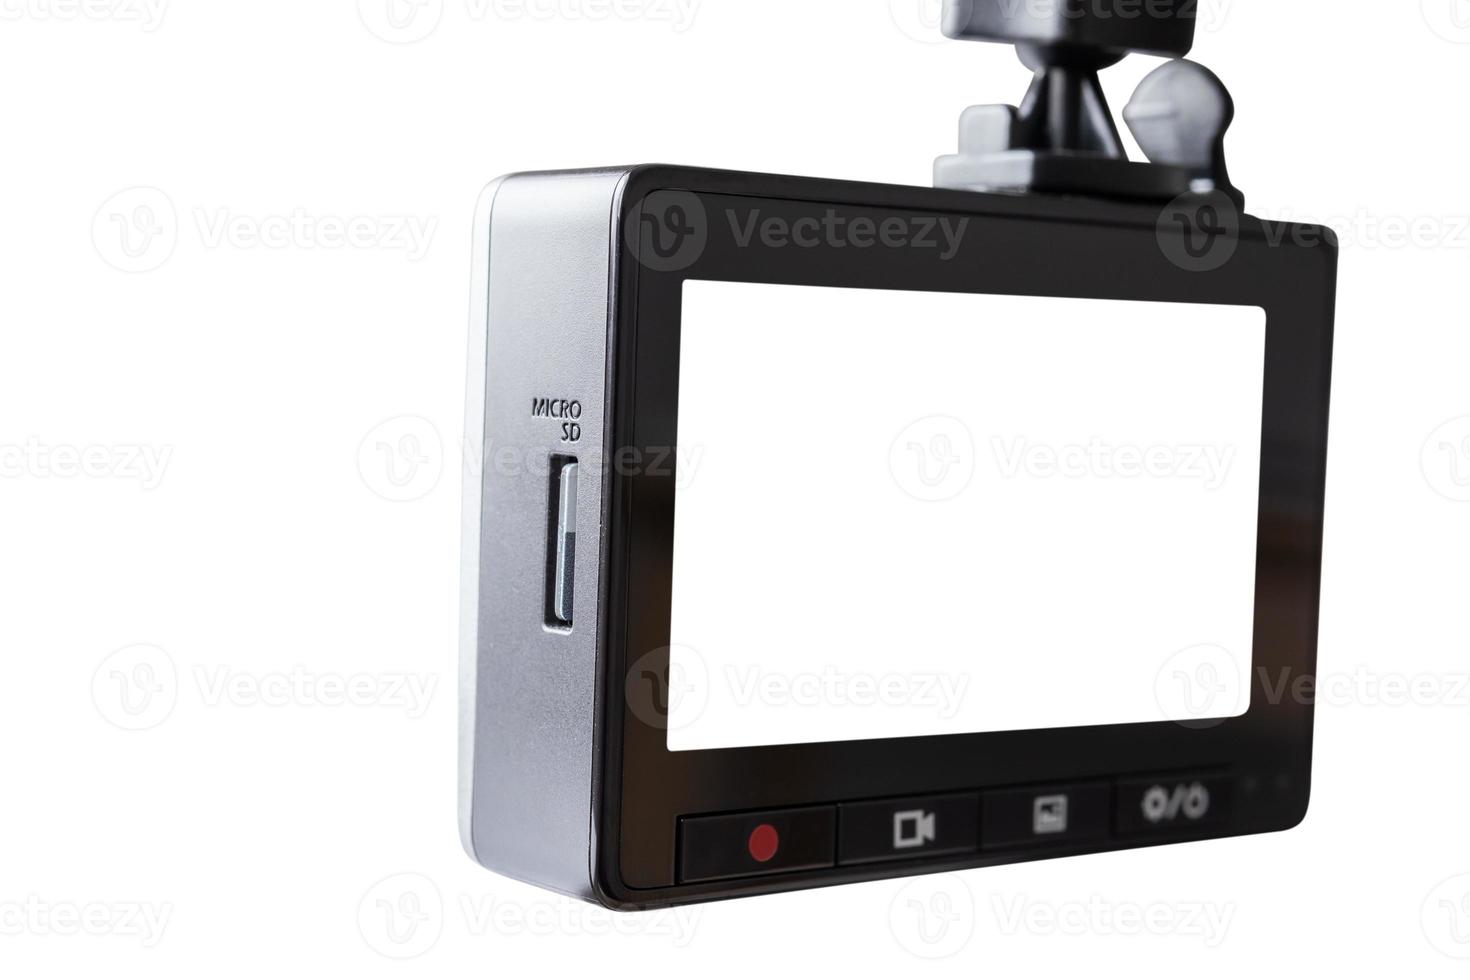 Grabadora de vídeo de cámara cctv de coche aislado sobre fondo blanco.  13029876 Foto de stock en Vecteezy